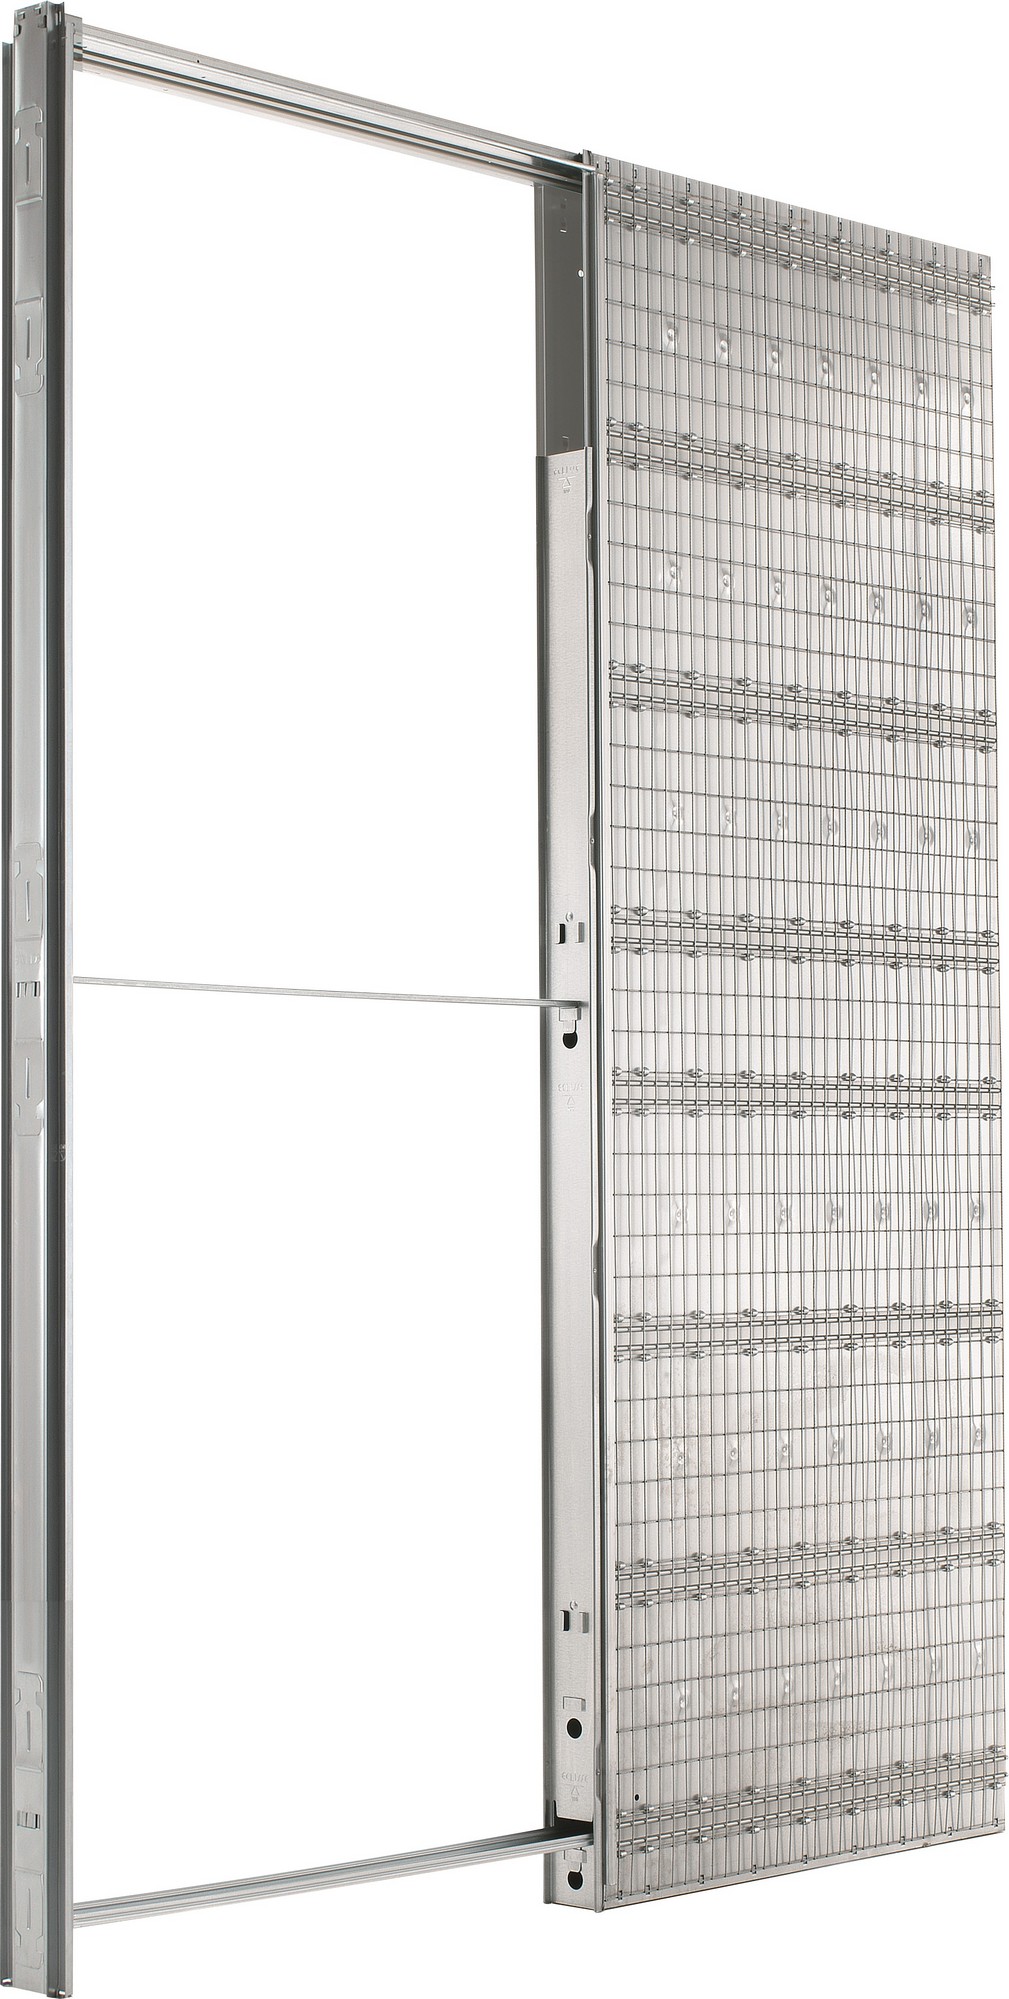 Pouzdro Eclisse Standard 900/2100 mm do zdiva tl. 125 mm